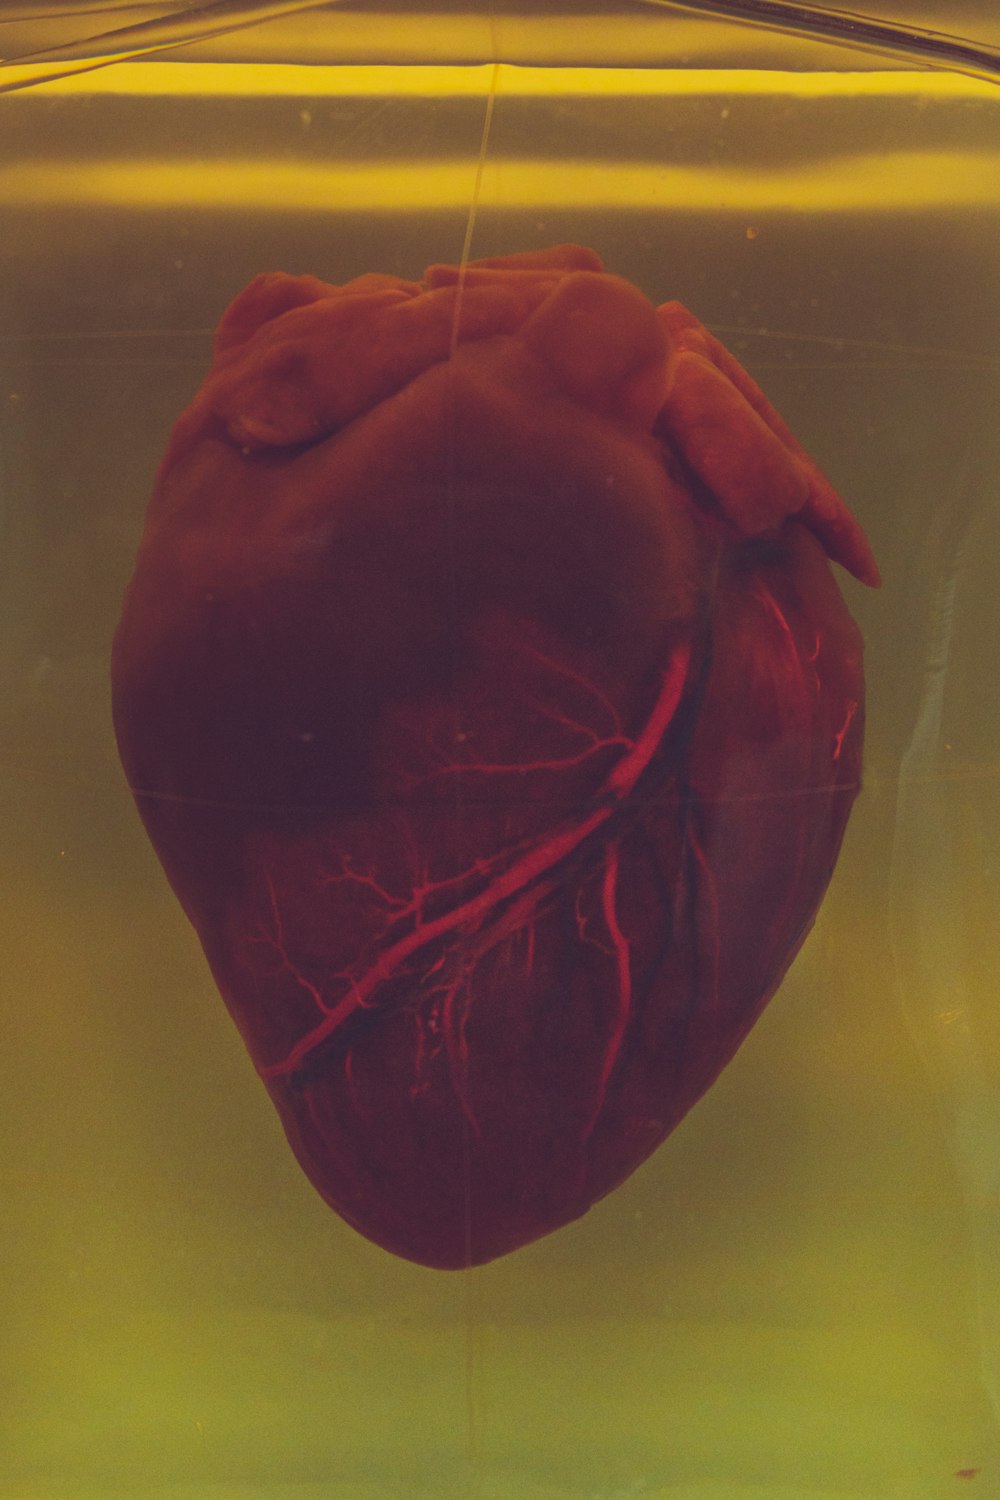 Cœur humain